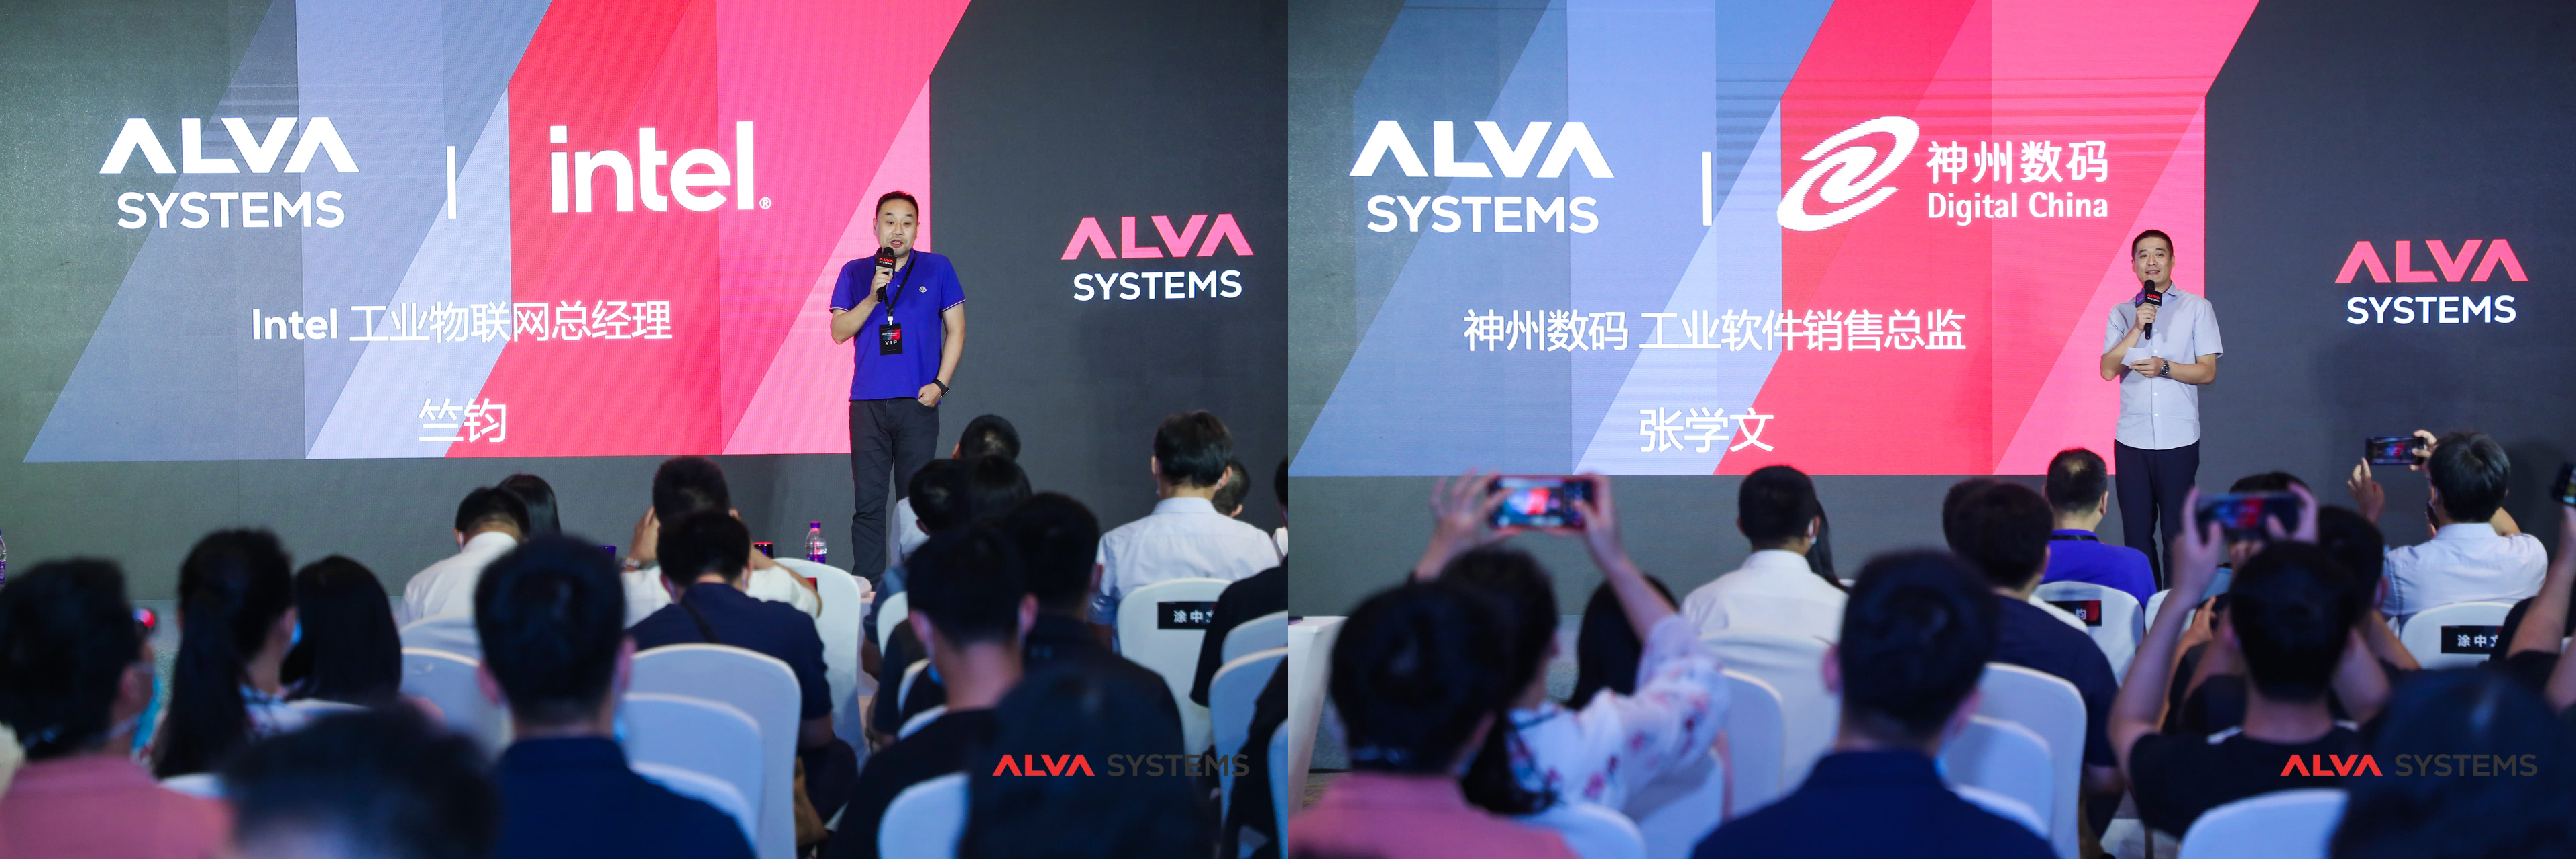 ALVA Systems发布全新AR产品平台 倪光南院士出席并致辞插图4